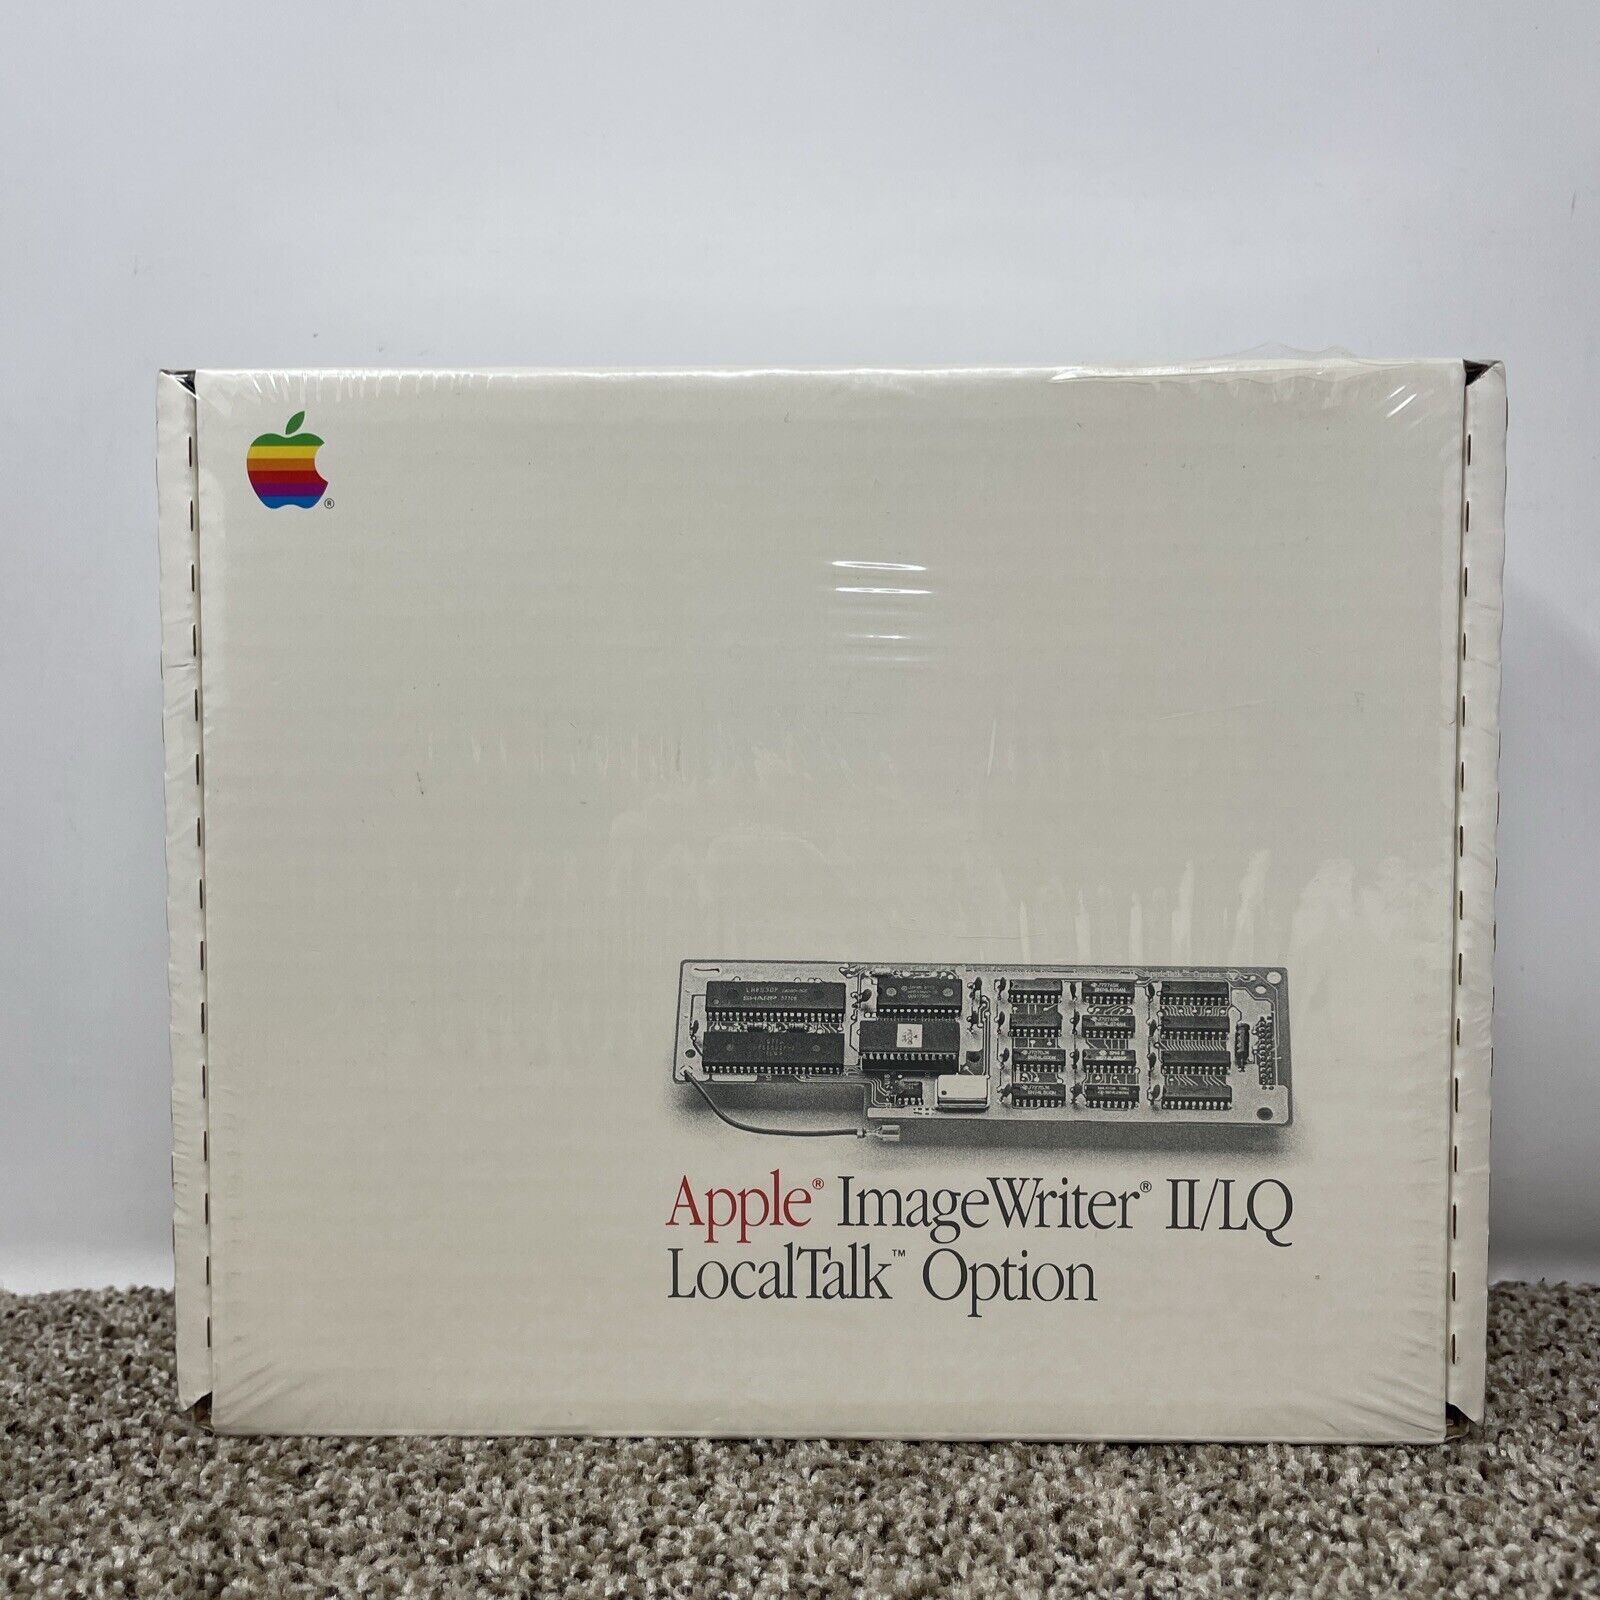 Vintage Apple Image Writer II/LQ Local Talk Option A9B0314 New Sealed in plastic